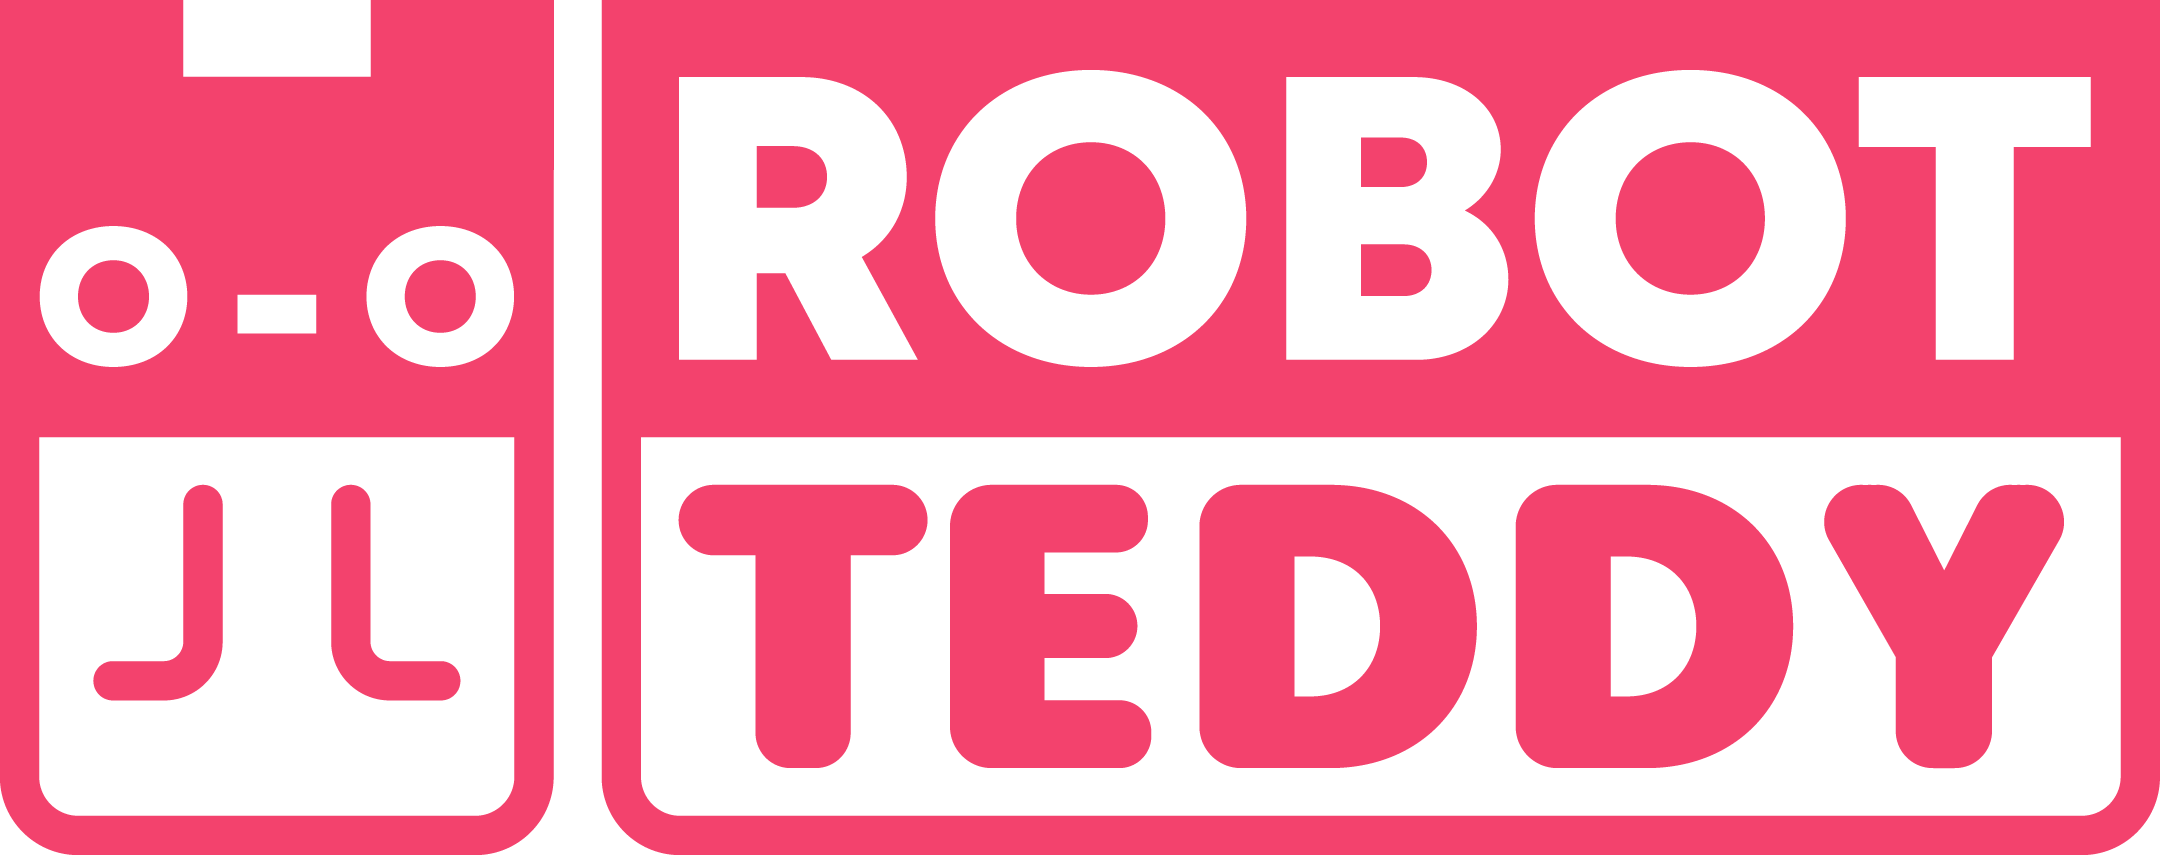 Logo for Robot Teddy (Thunderful)